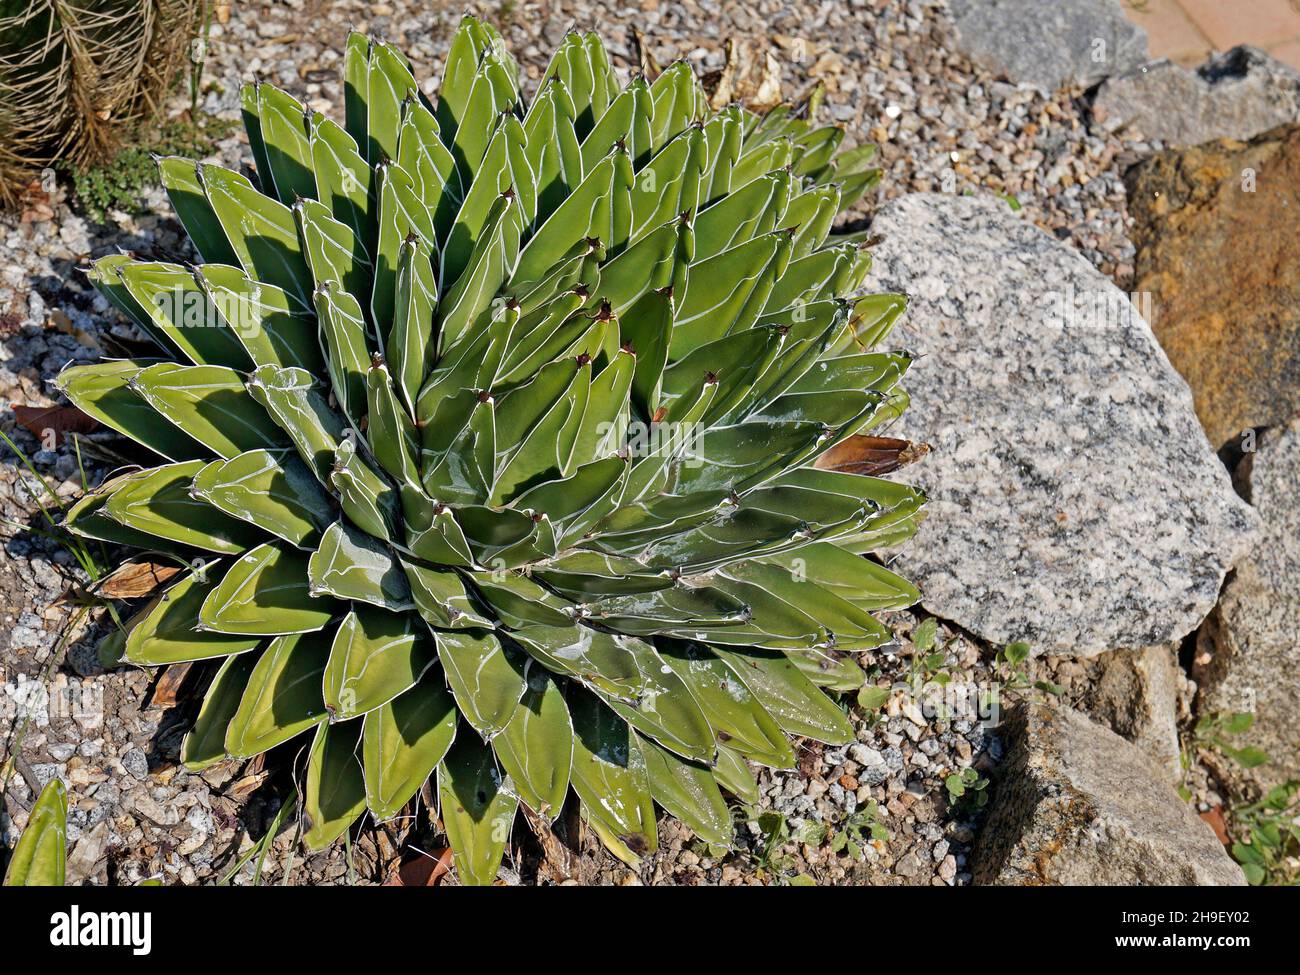 Agave plant on desert garden (Agave victoriae-reginae) Stock Photo